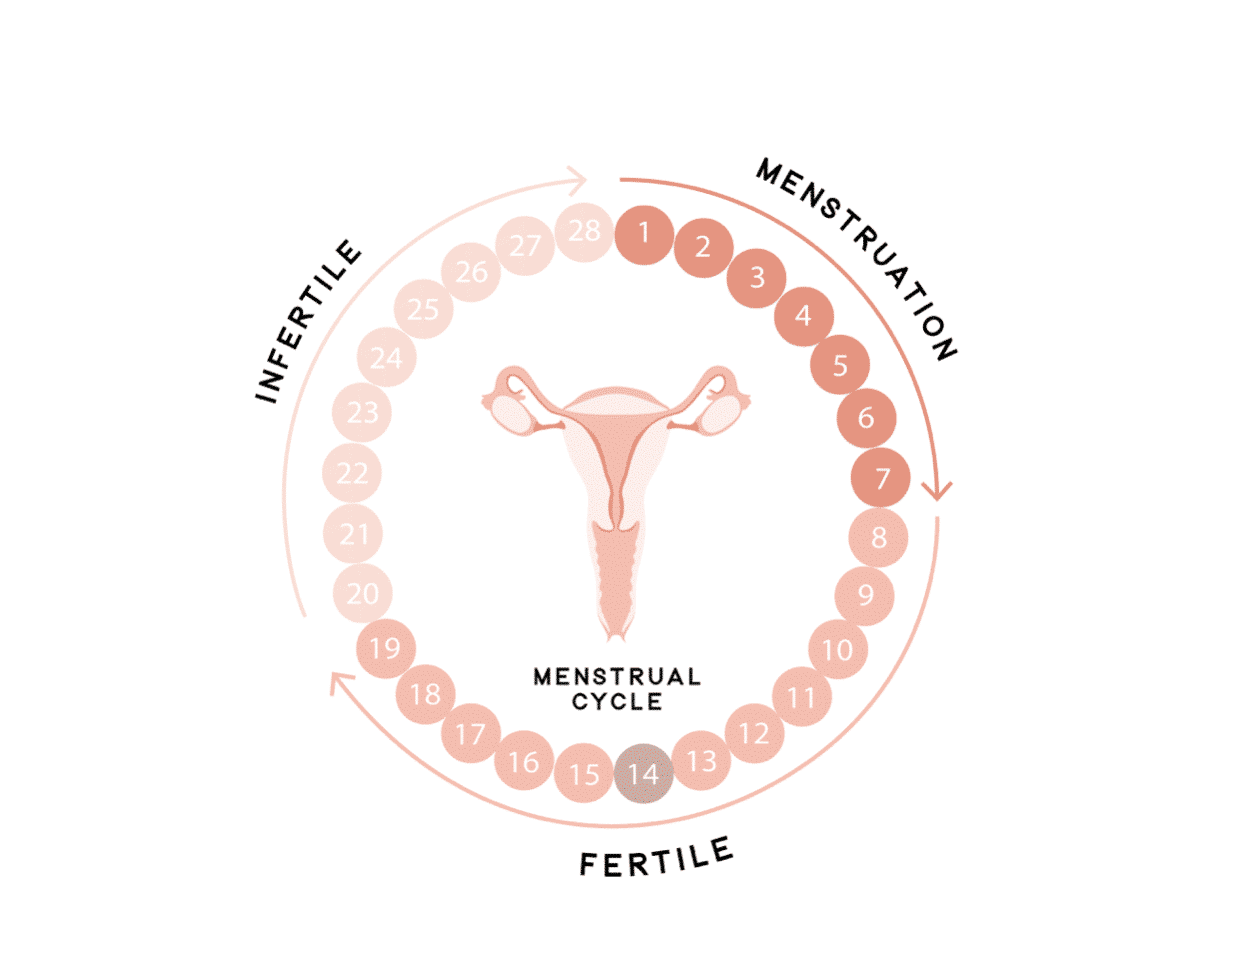 Fertile Cervical Fluid Testing